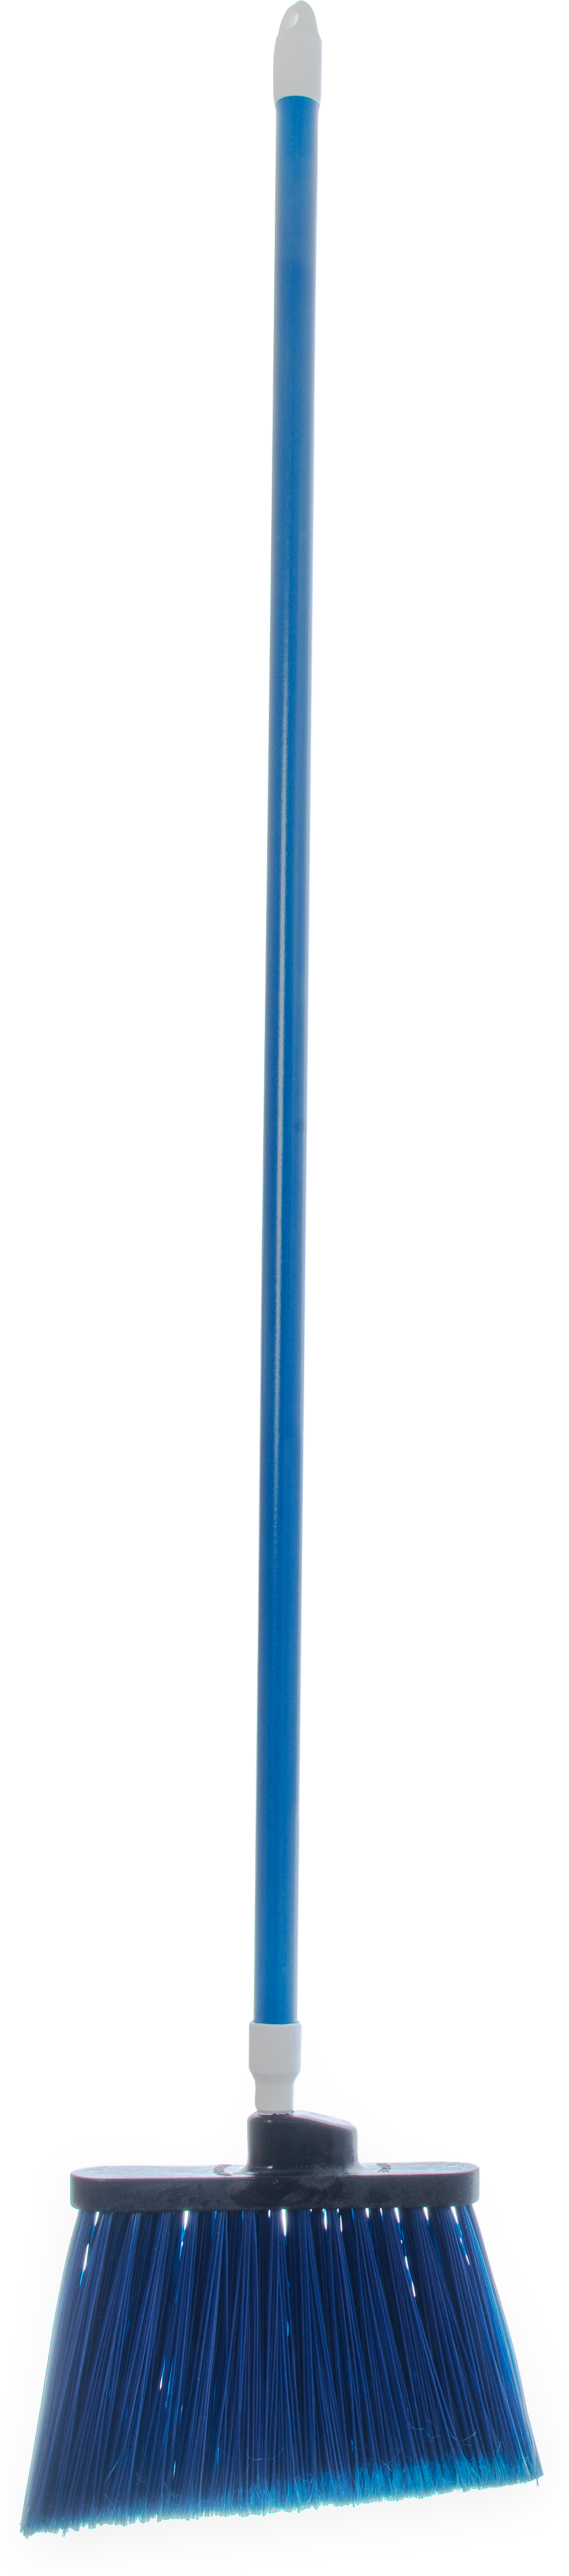 Duo-Sweep Angle Broom Flagged Bristle 56 Long - Blue